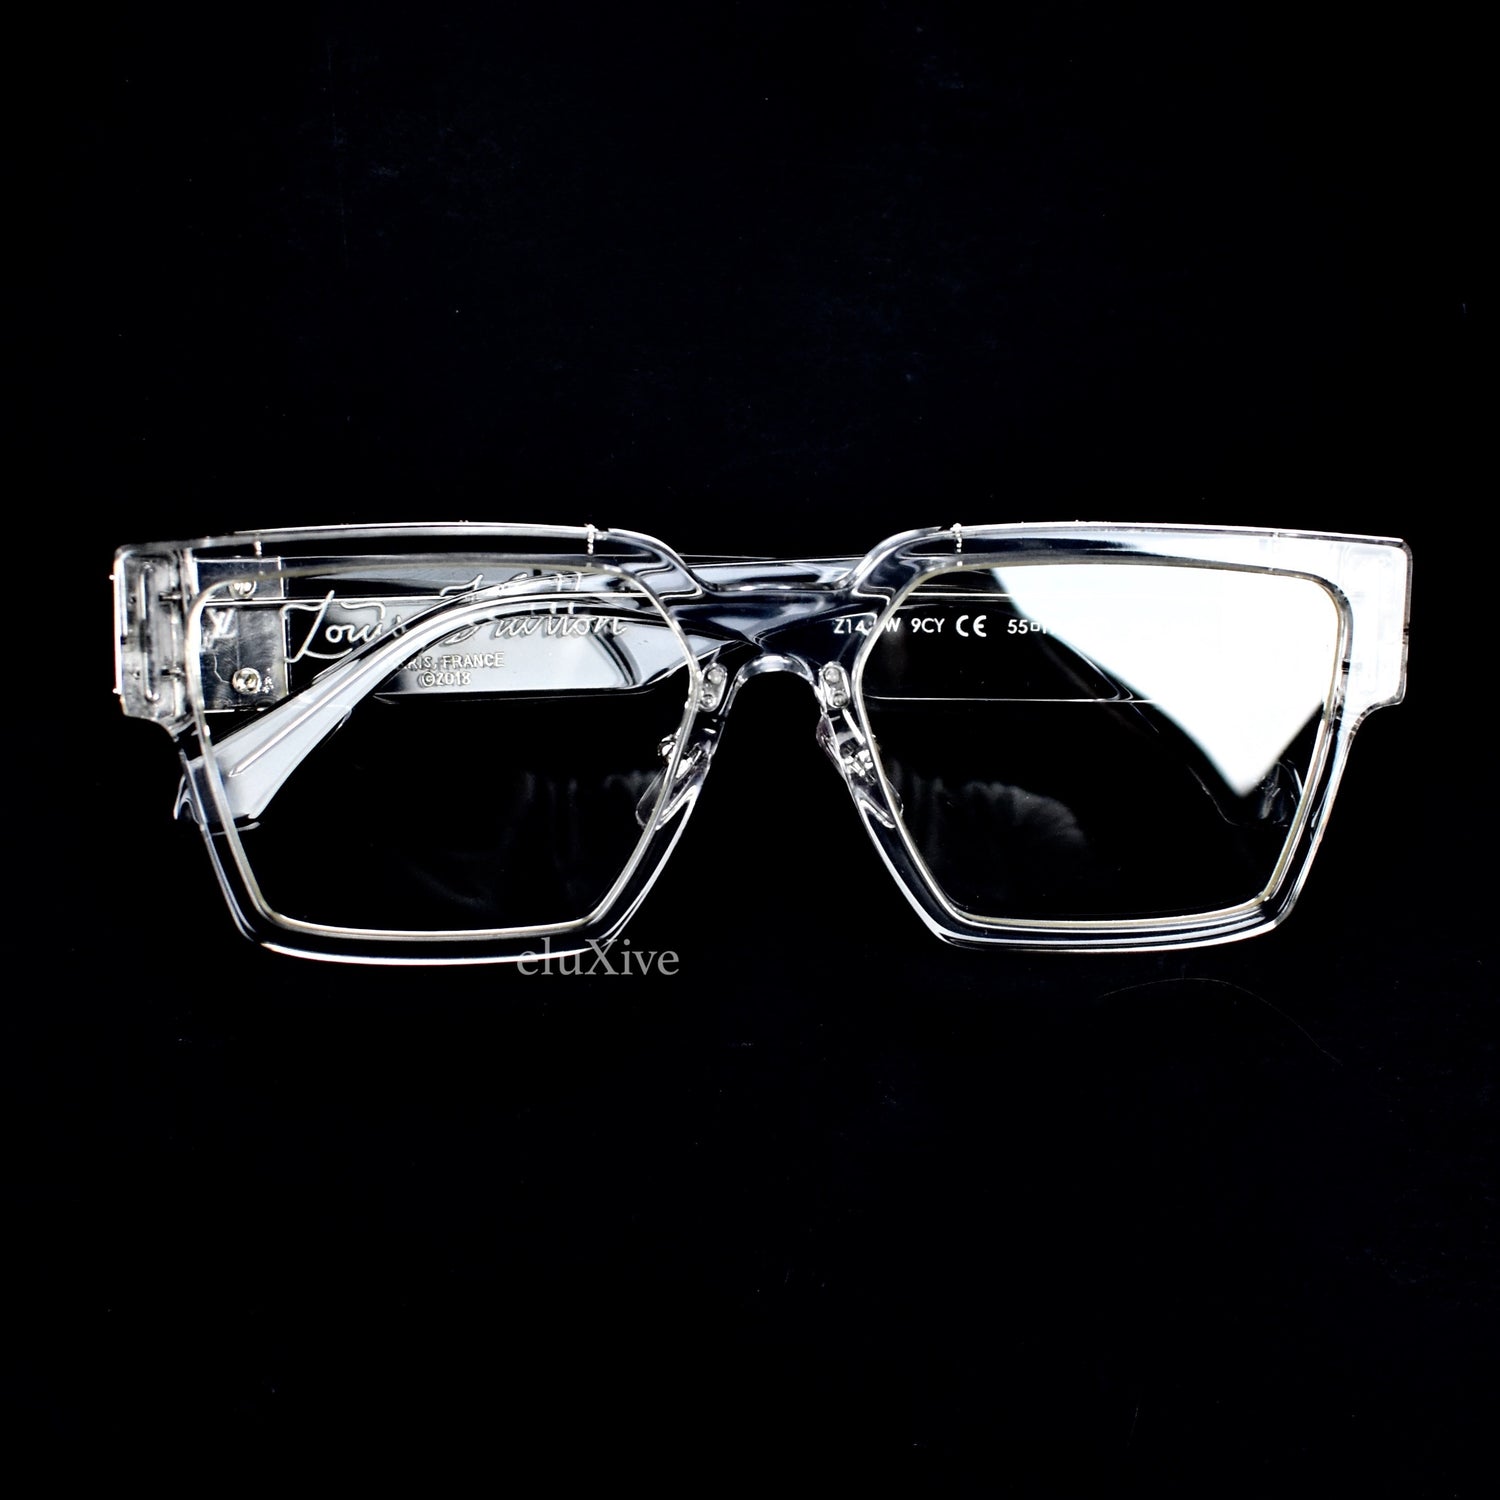 LV 2184 Clear 49/15/140 Eyeglass Frame  Louis vuitton glasses, Eyeglasses  frames, Eyeglasses